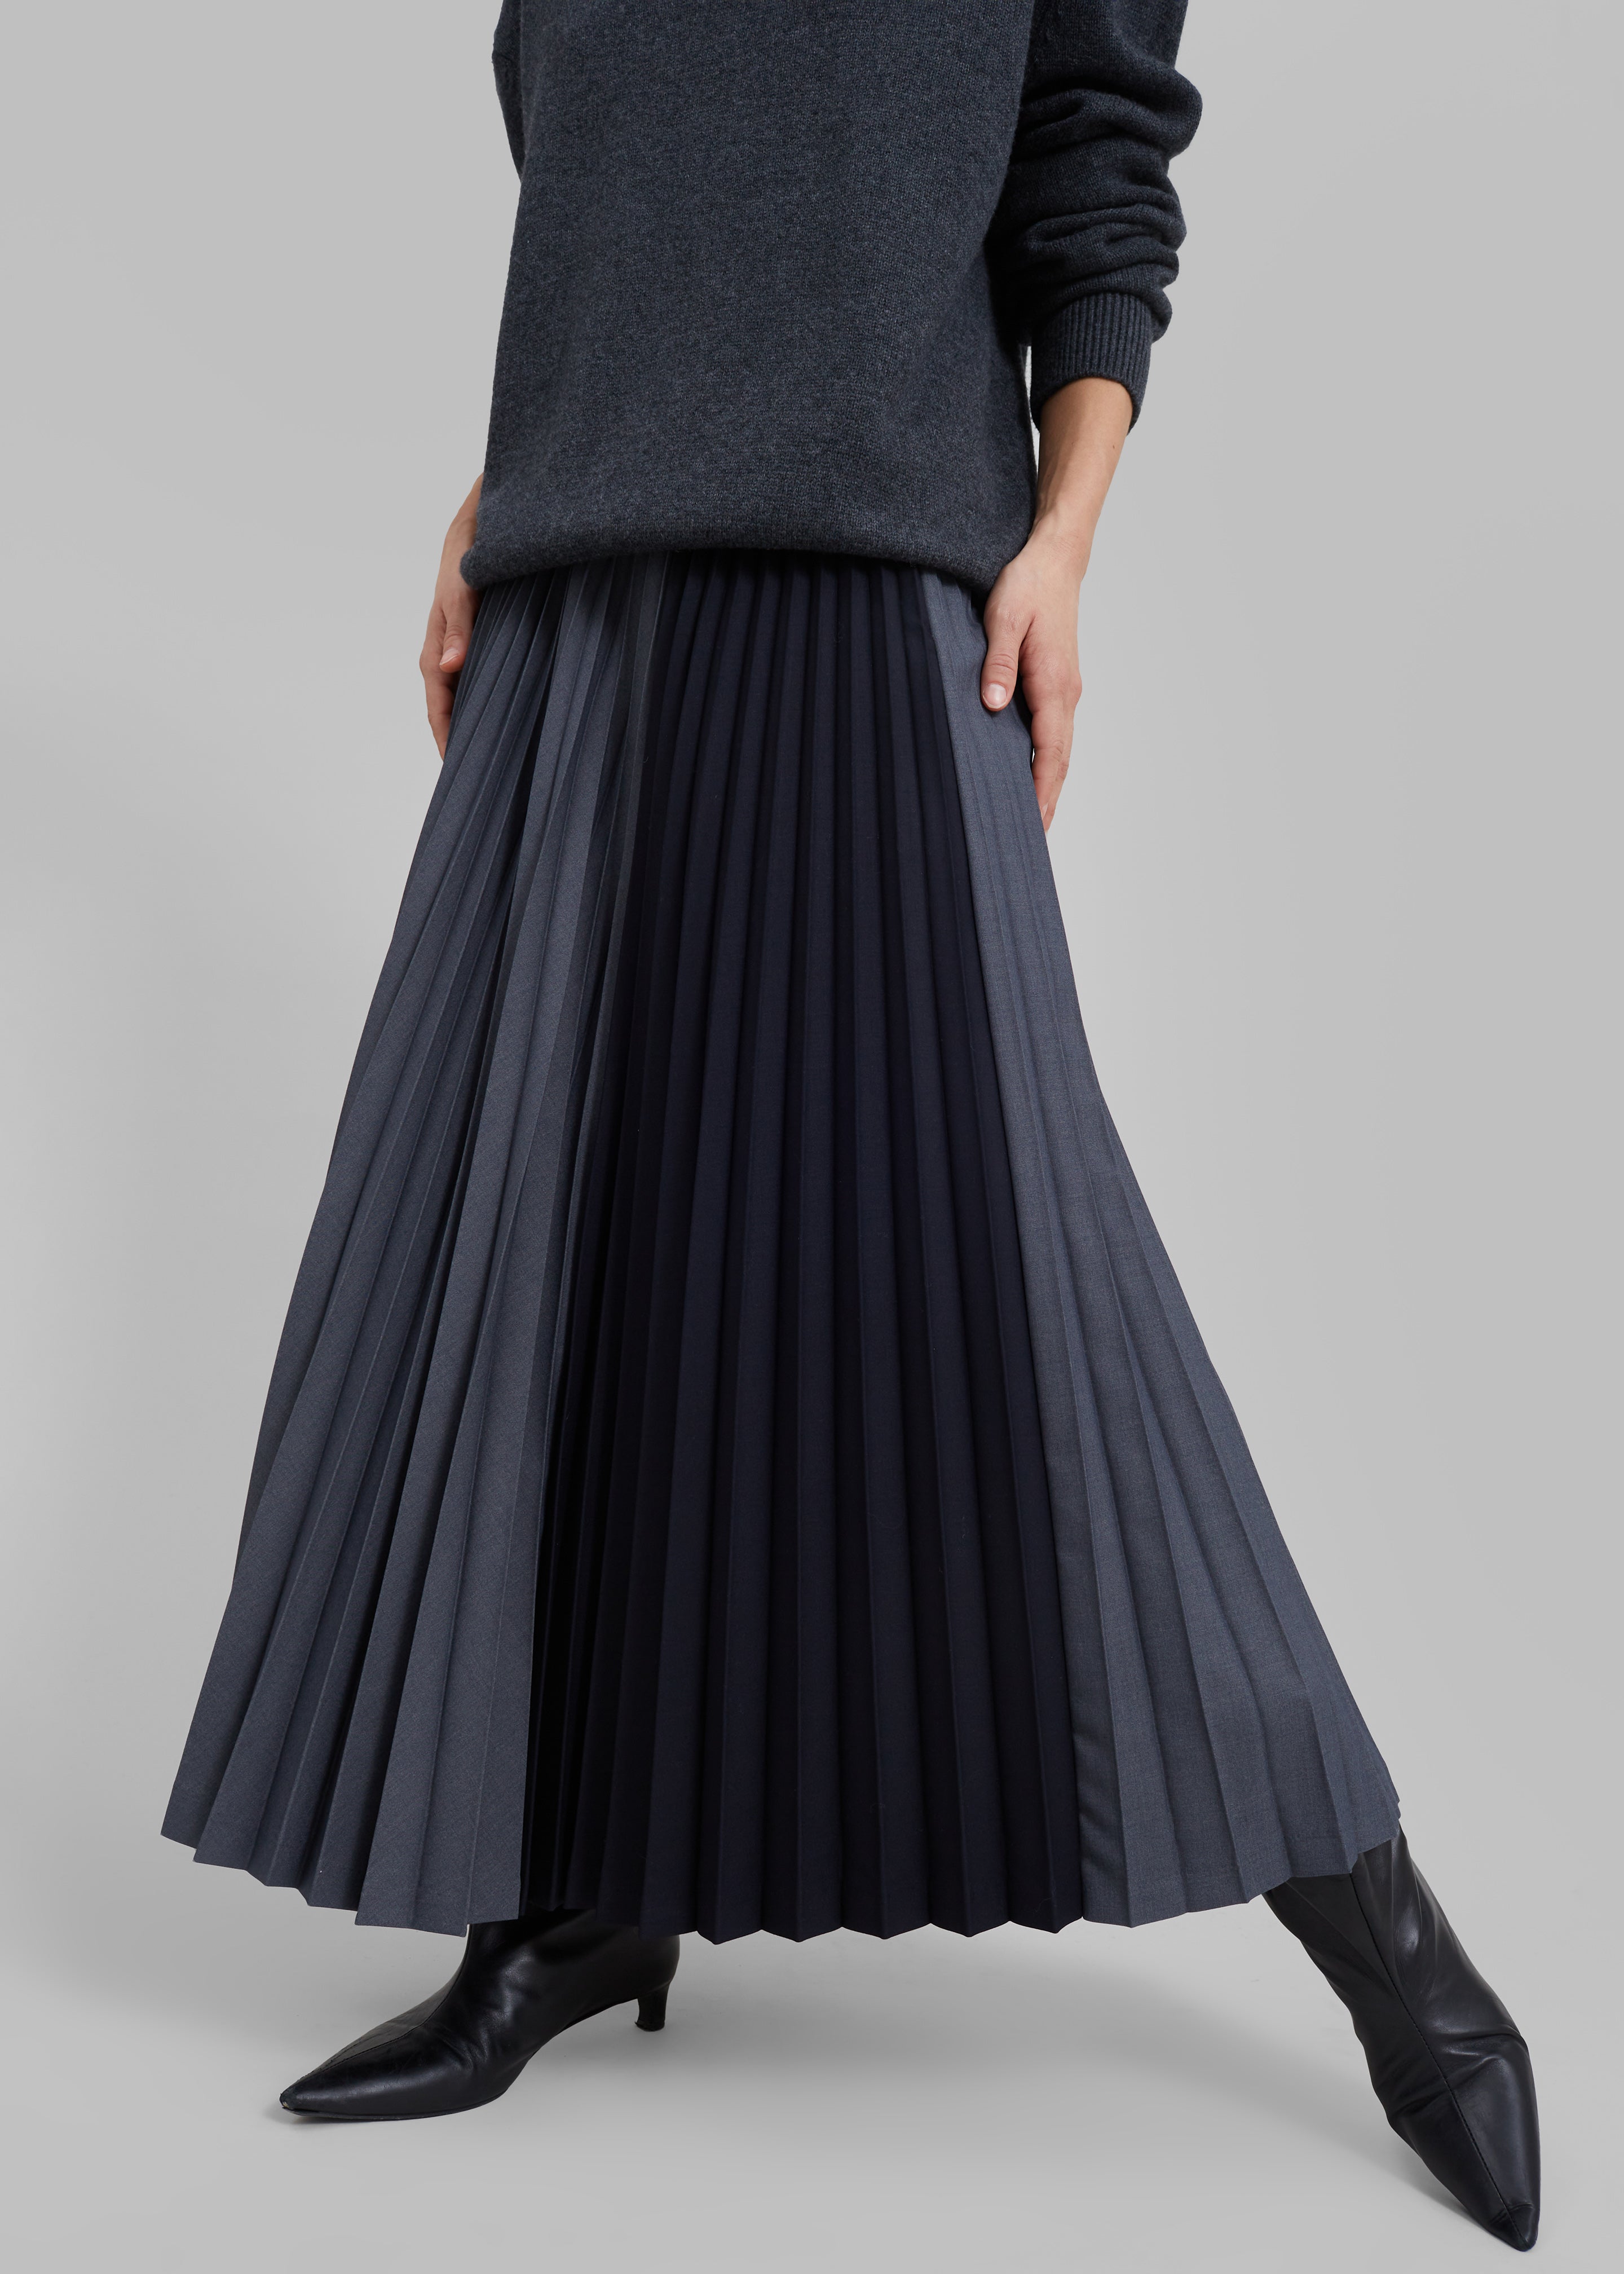 Orem Pleated Skirt - Charcoal